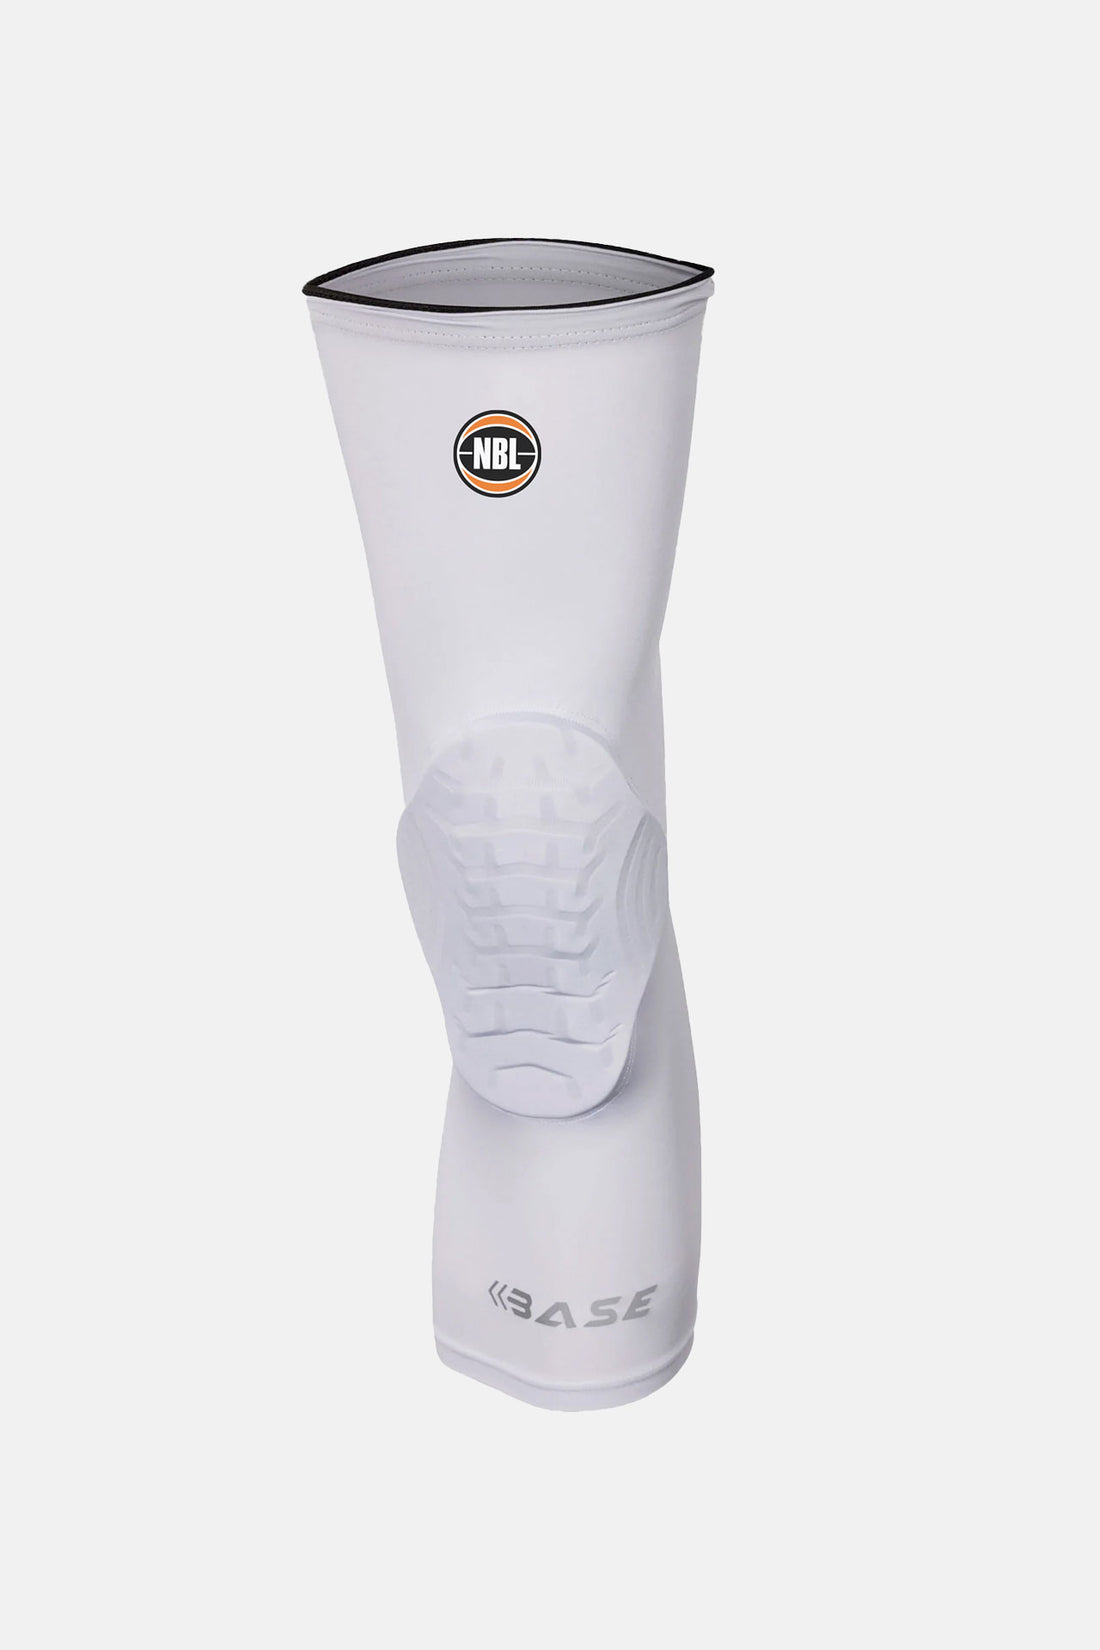 BASE + NBL Compression Padded Knee Guard (SIngle) - White